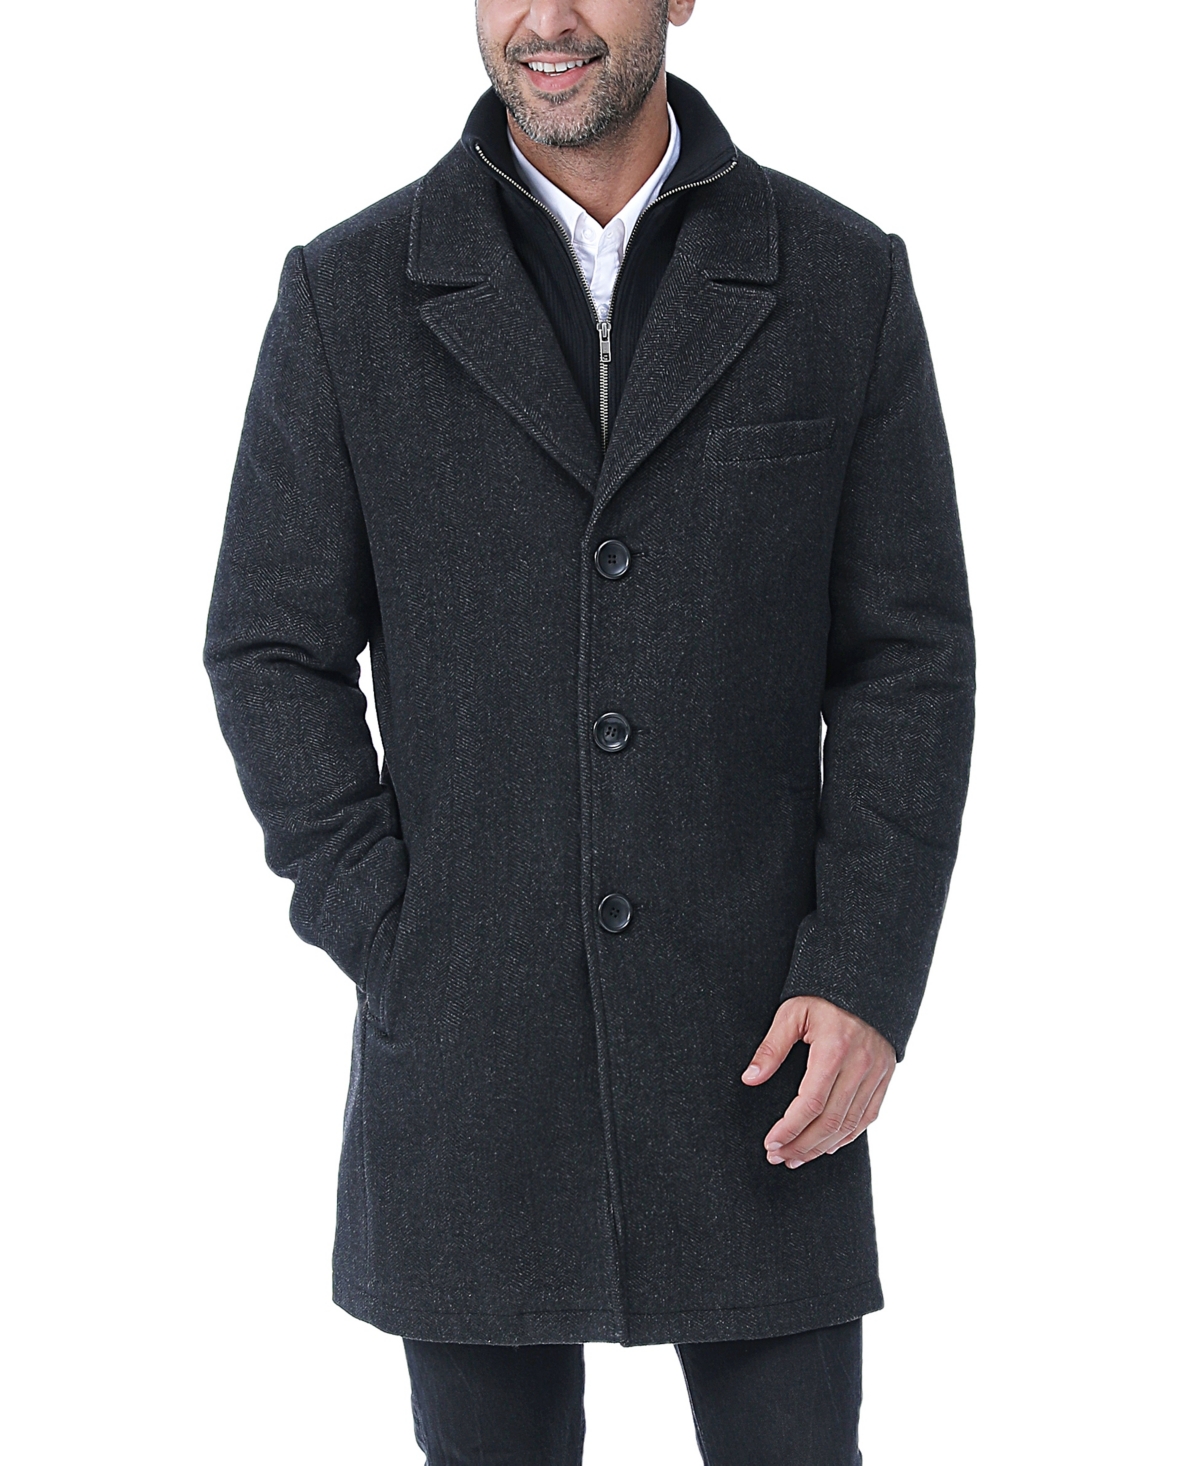 Men Leon Herringbone Wool Blend Coat with Bib - Tall - Black